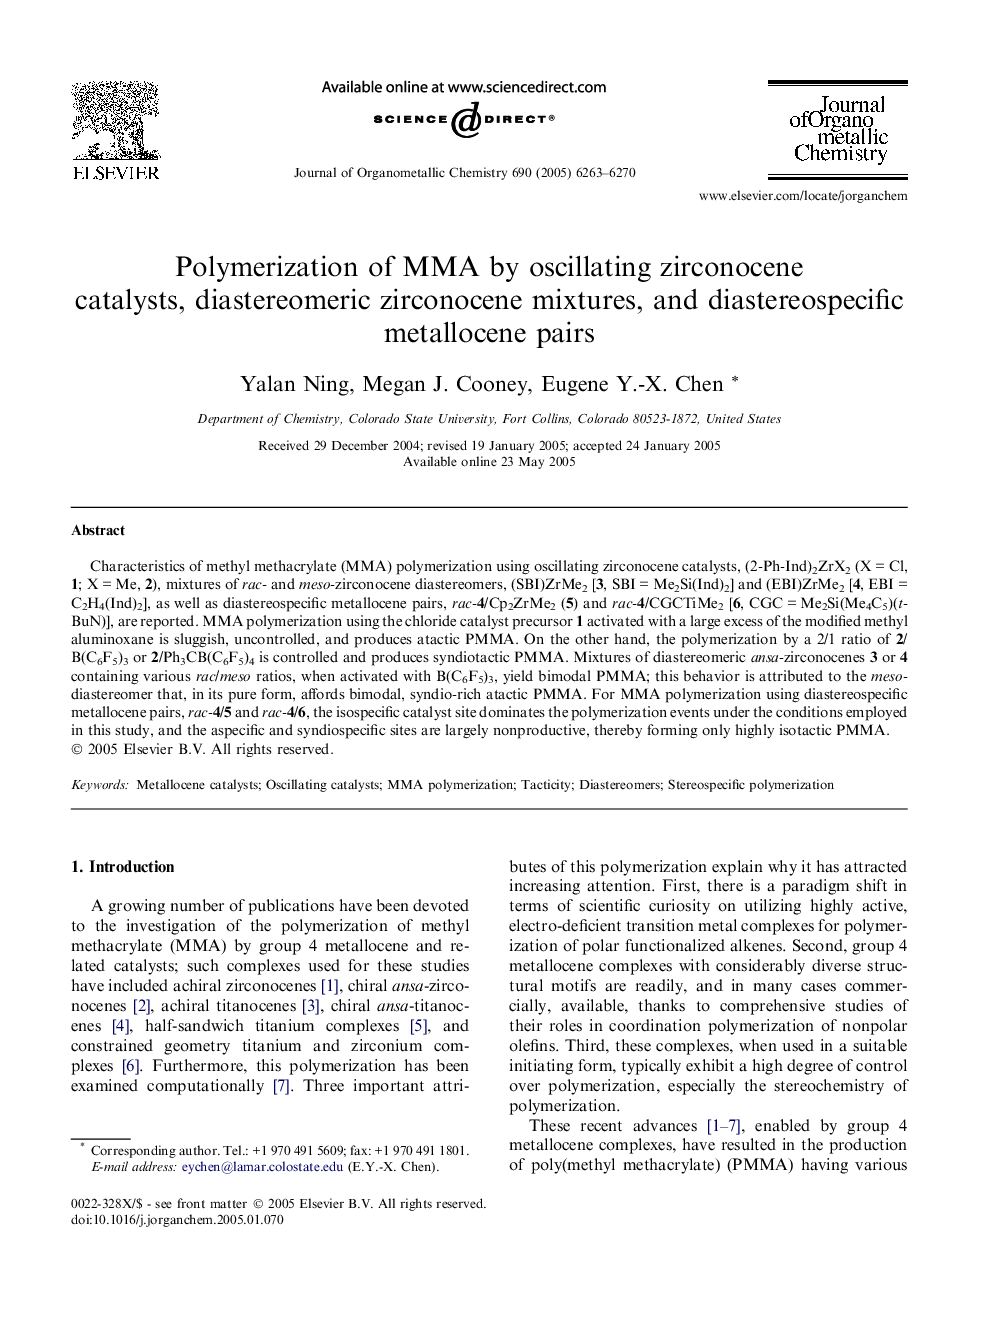 Polymerization of MMA by oscillating zirconocene catalysts, diastereomeric zirconocene mixtures, and diastereospecific metallocene pairs